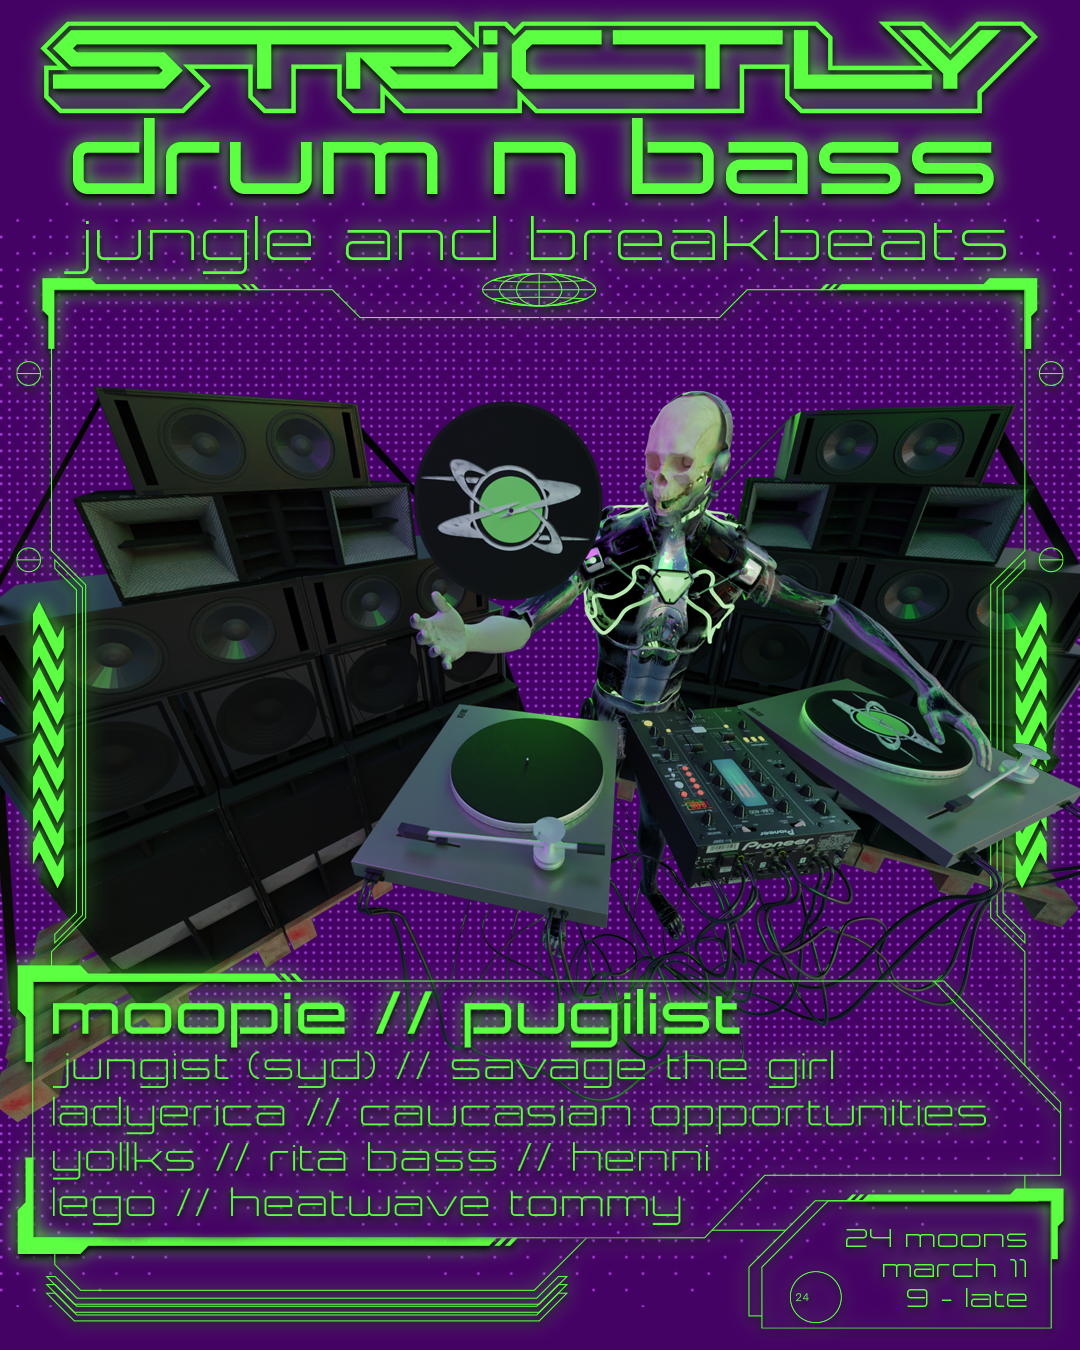 Strictly Drum n Bass with Moopie, Pugilist + more - フライヤー表